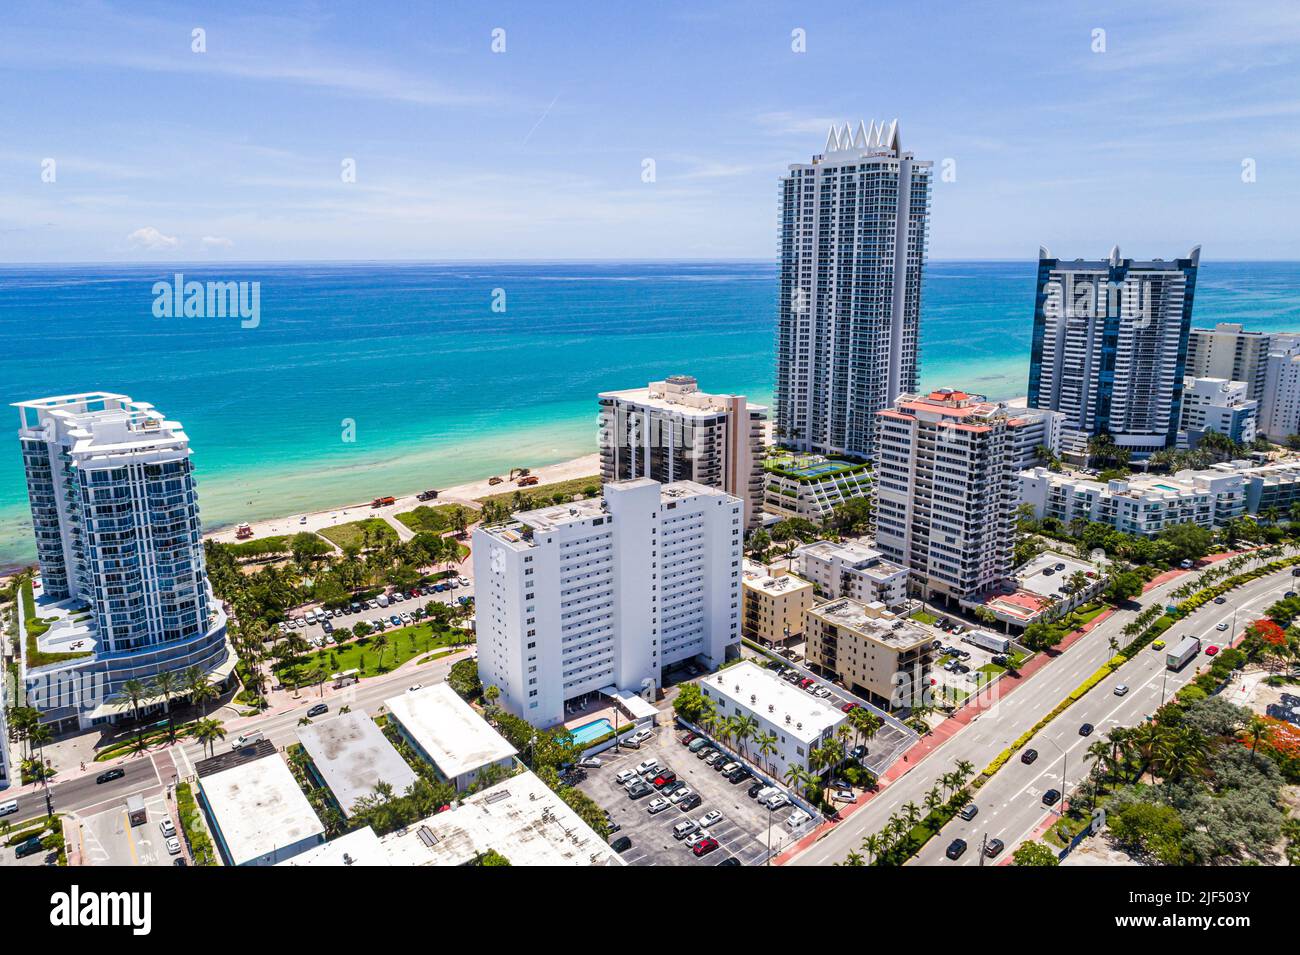 Miami Beach Florida, vista aerea dall'alto, Ocean Atlantic Ocean fronte oceano fronte mare edifici condomini fronte mare, Akoya alti condomini Foto Stock